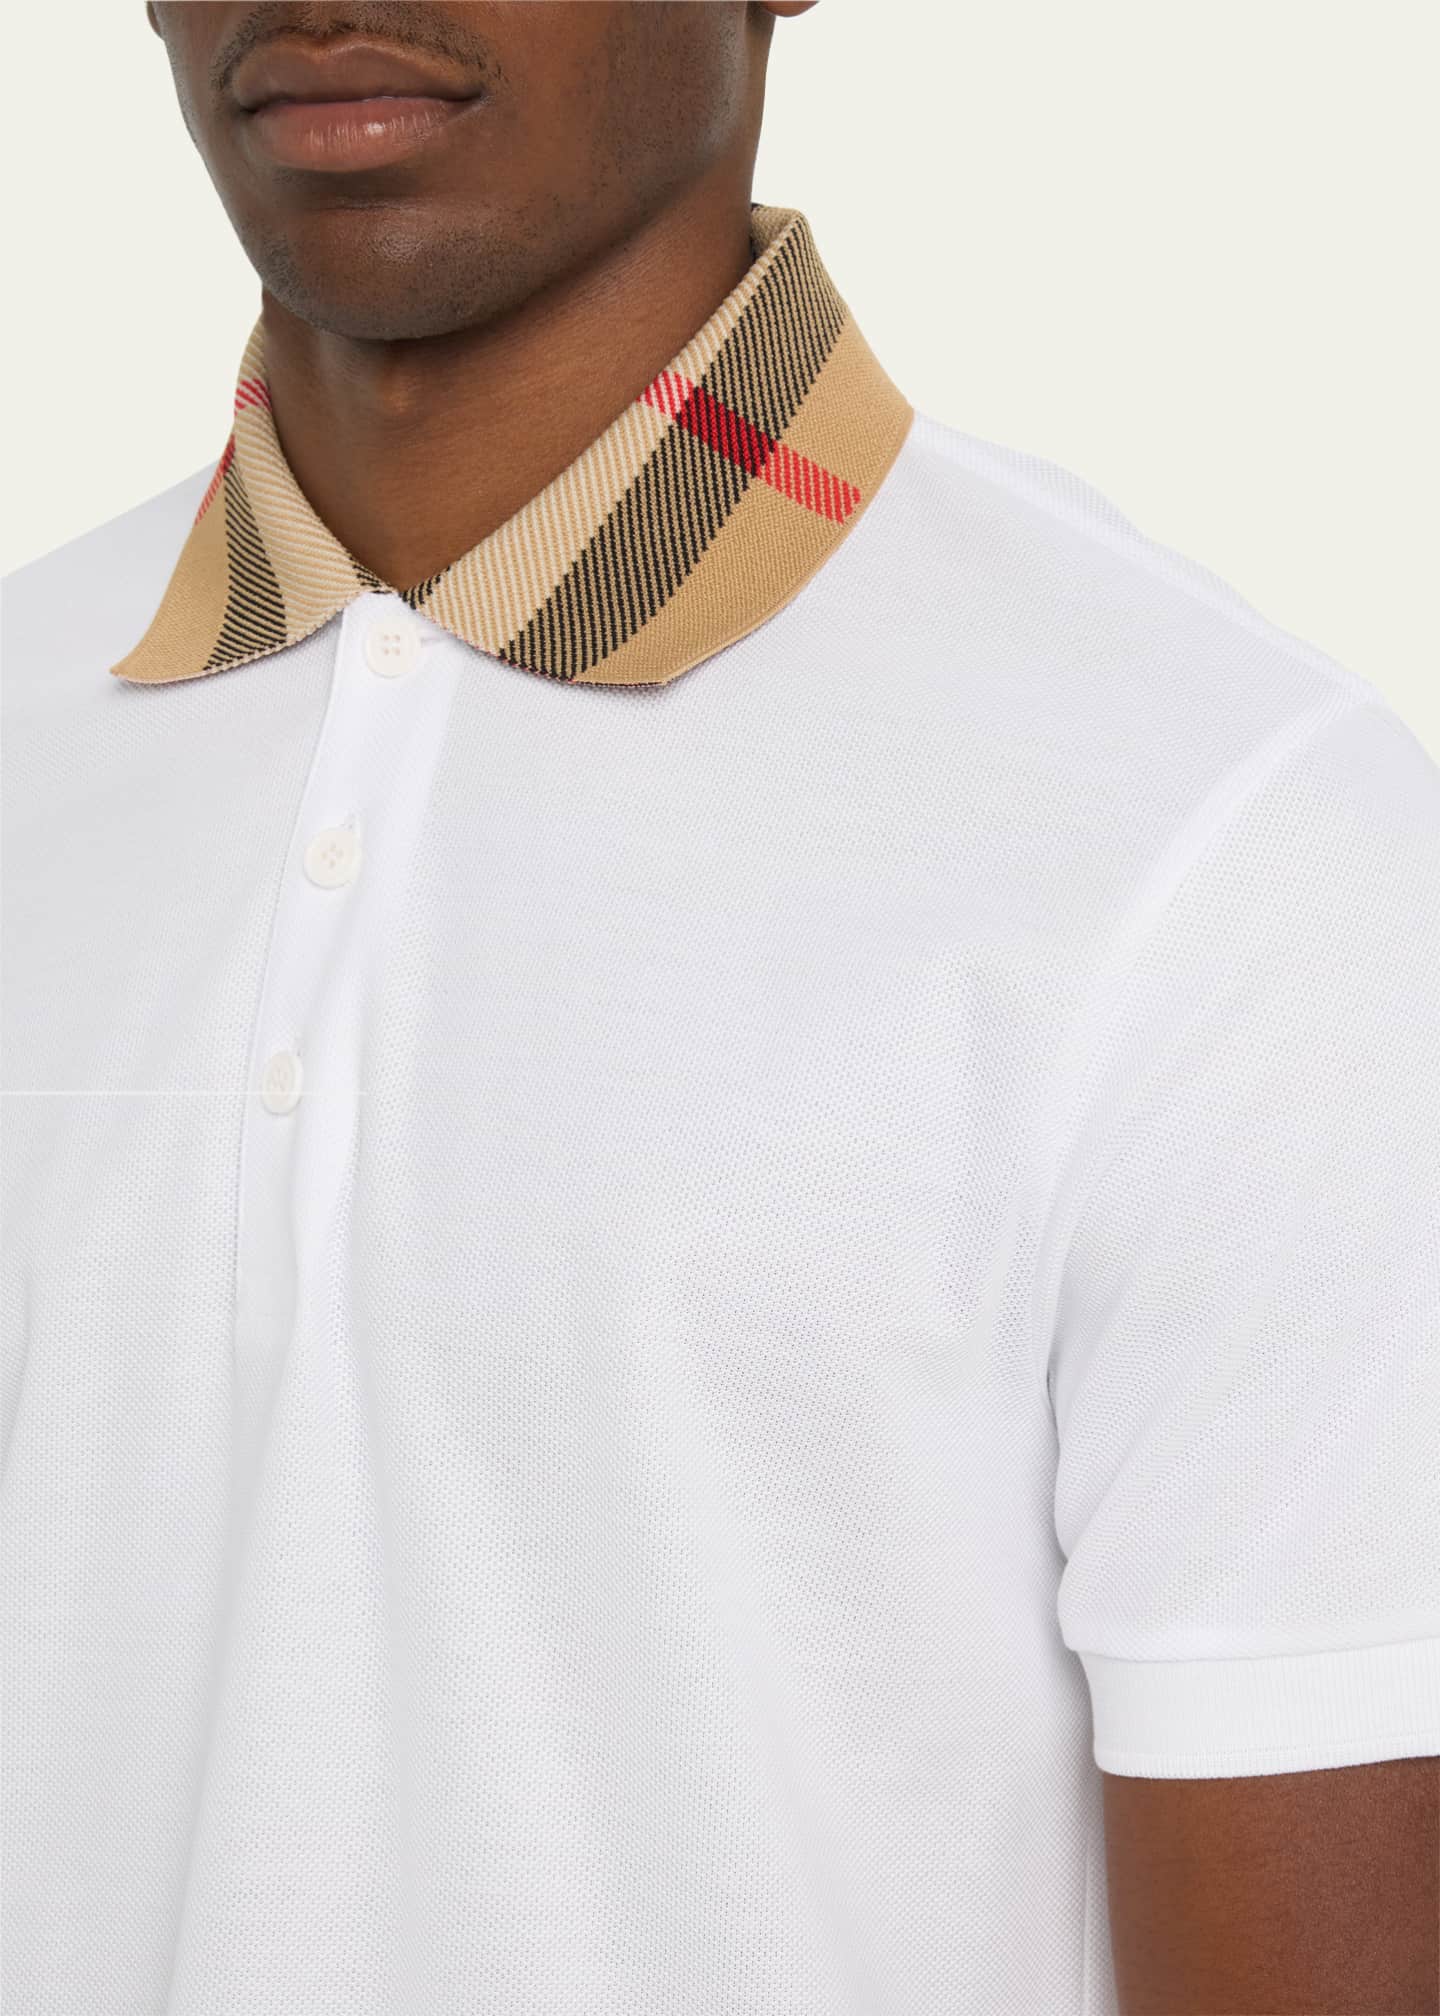  Men's Polo Shirts - BURBERRY / Men's Polo Shirts